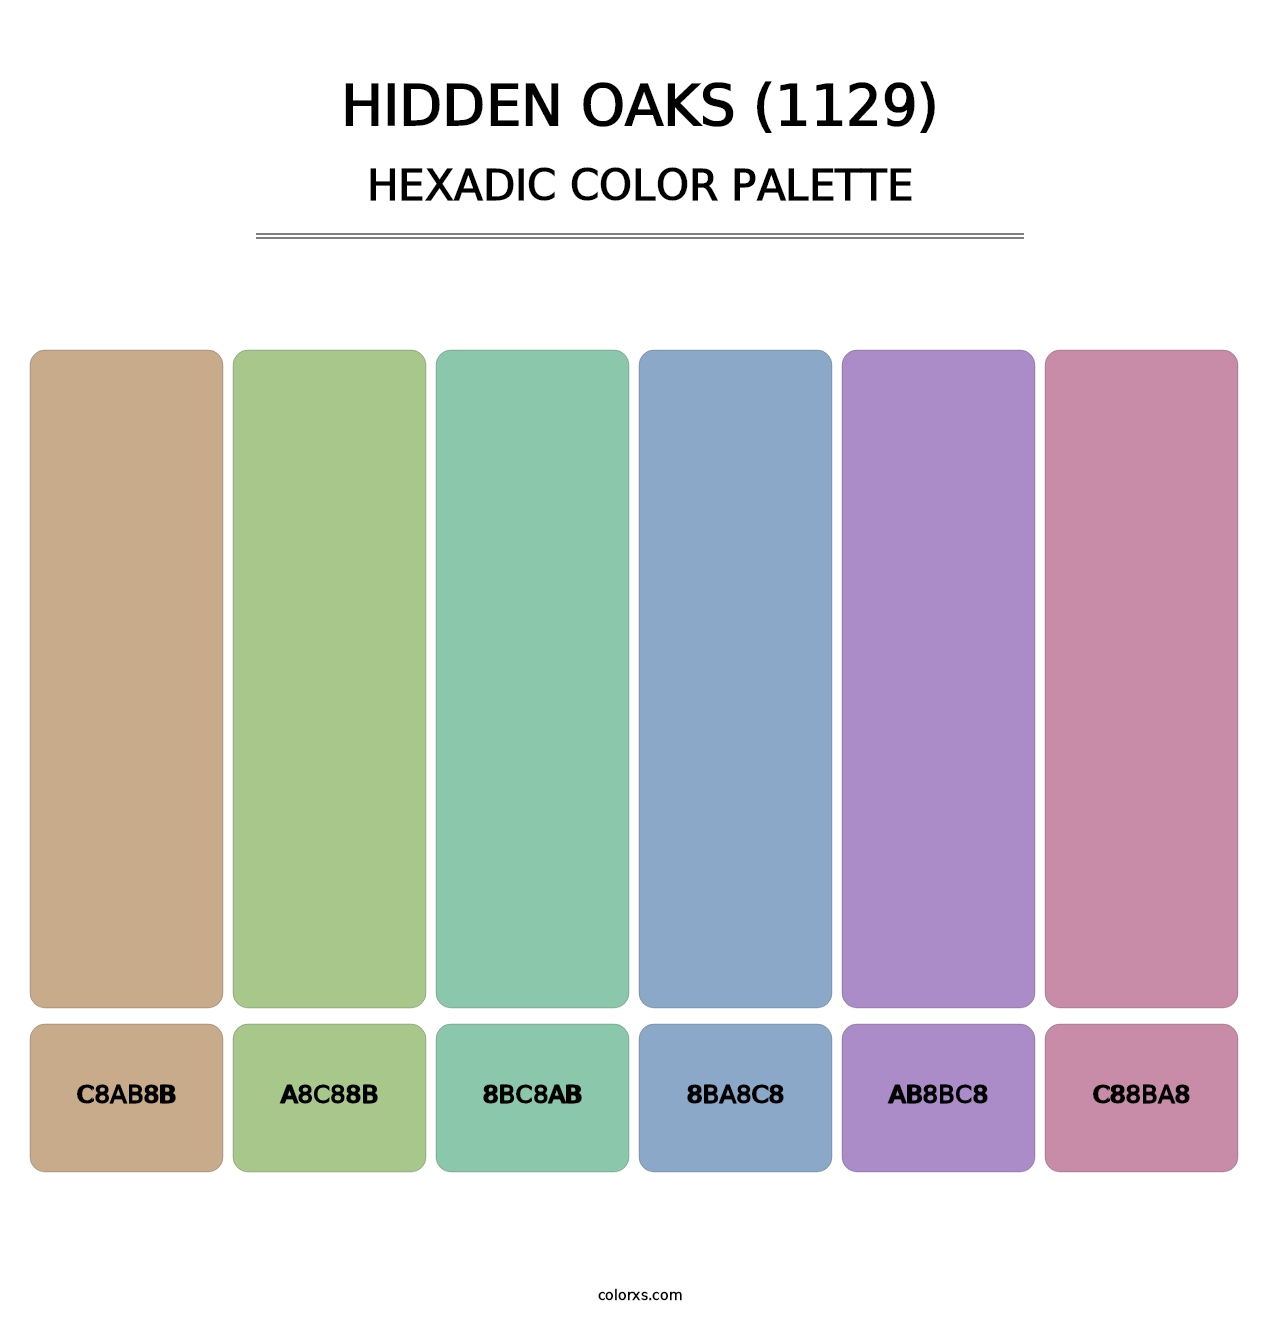 Hidden Oaks (1129) - Hexadic Color Palette